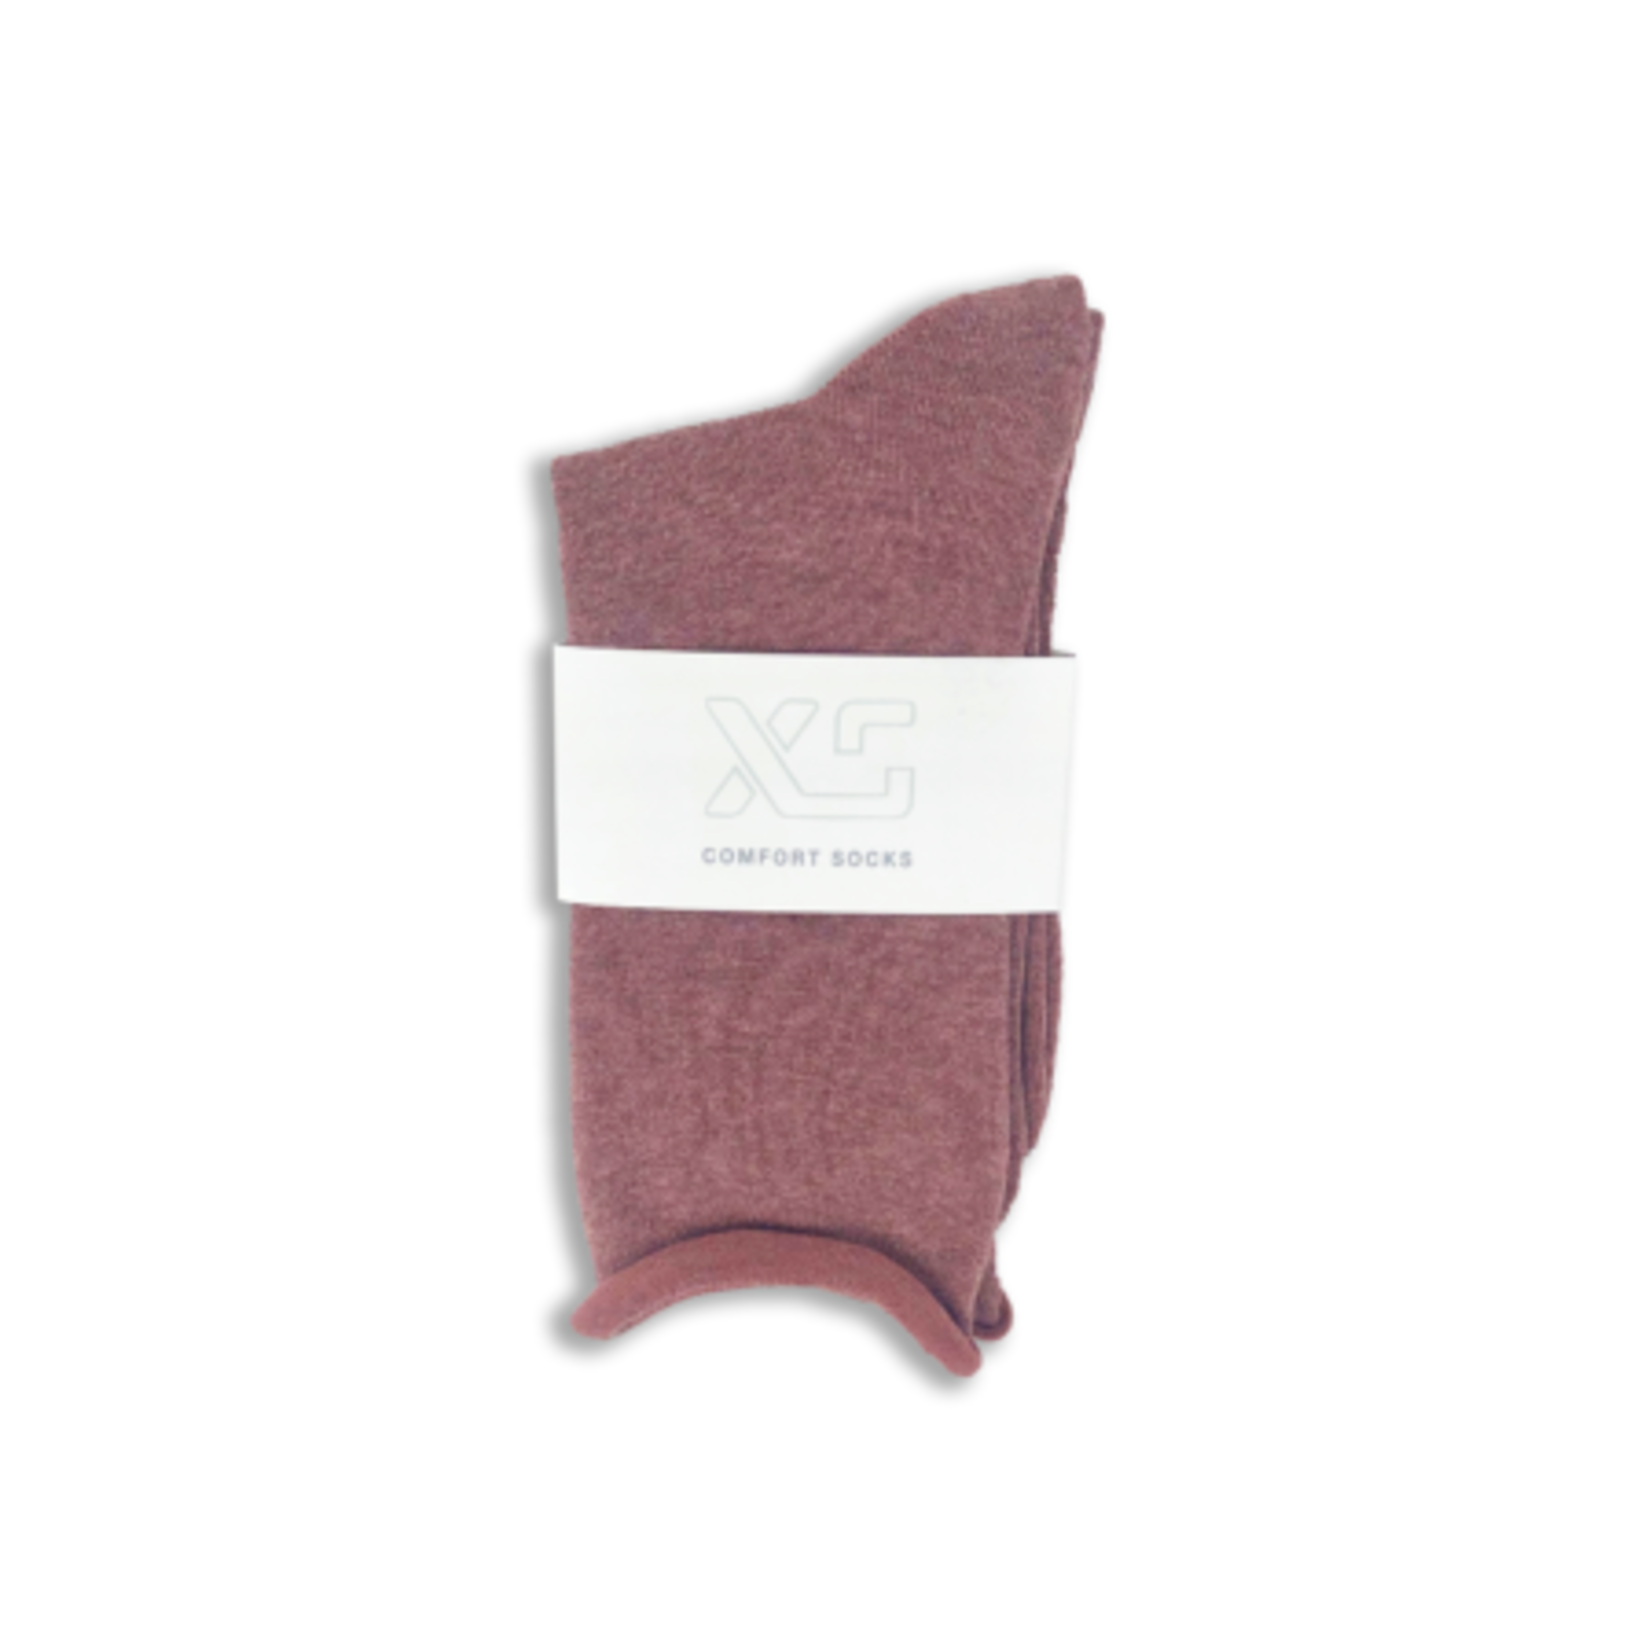 XS Unified XS Unified Comfort Socks